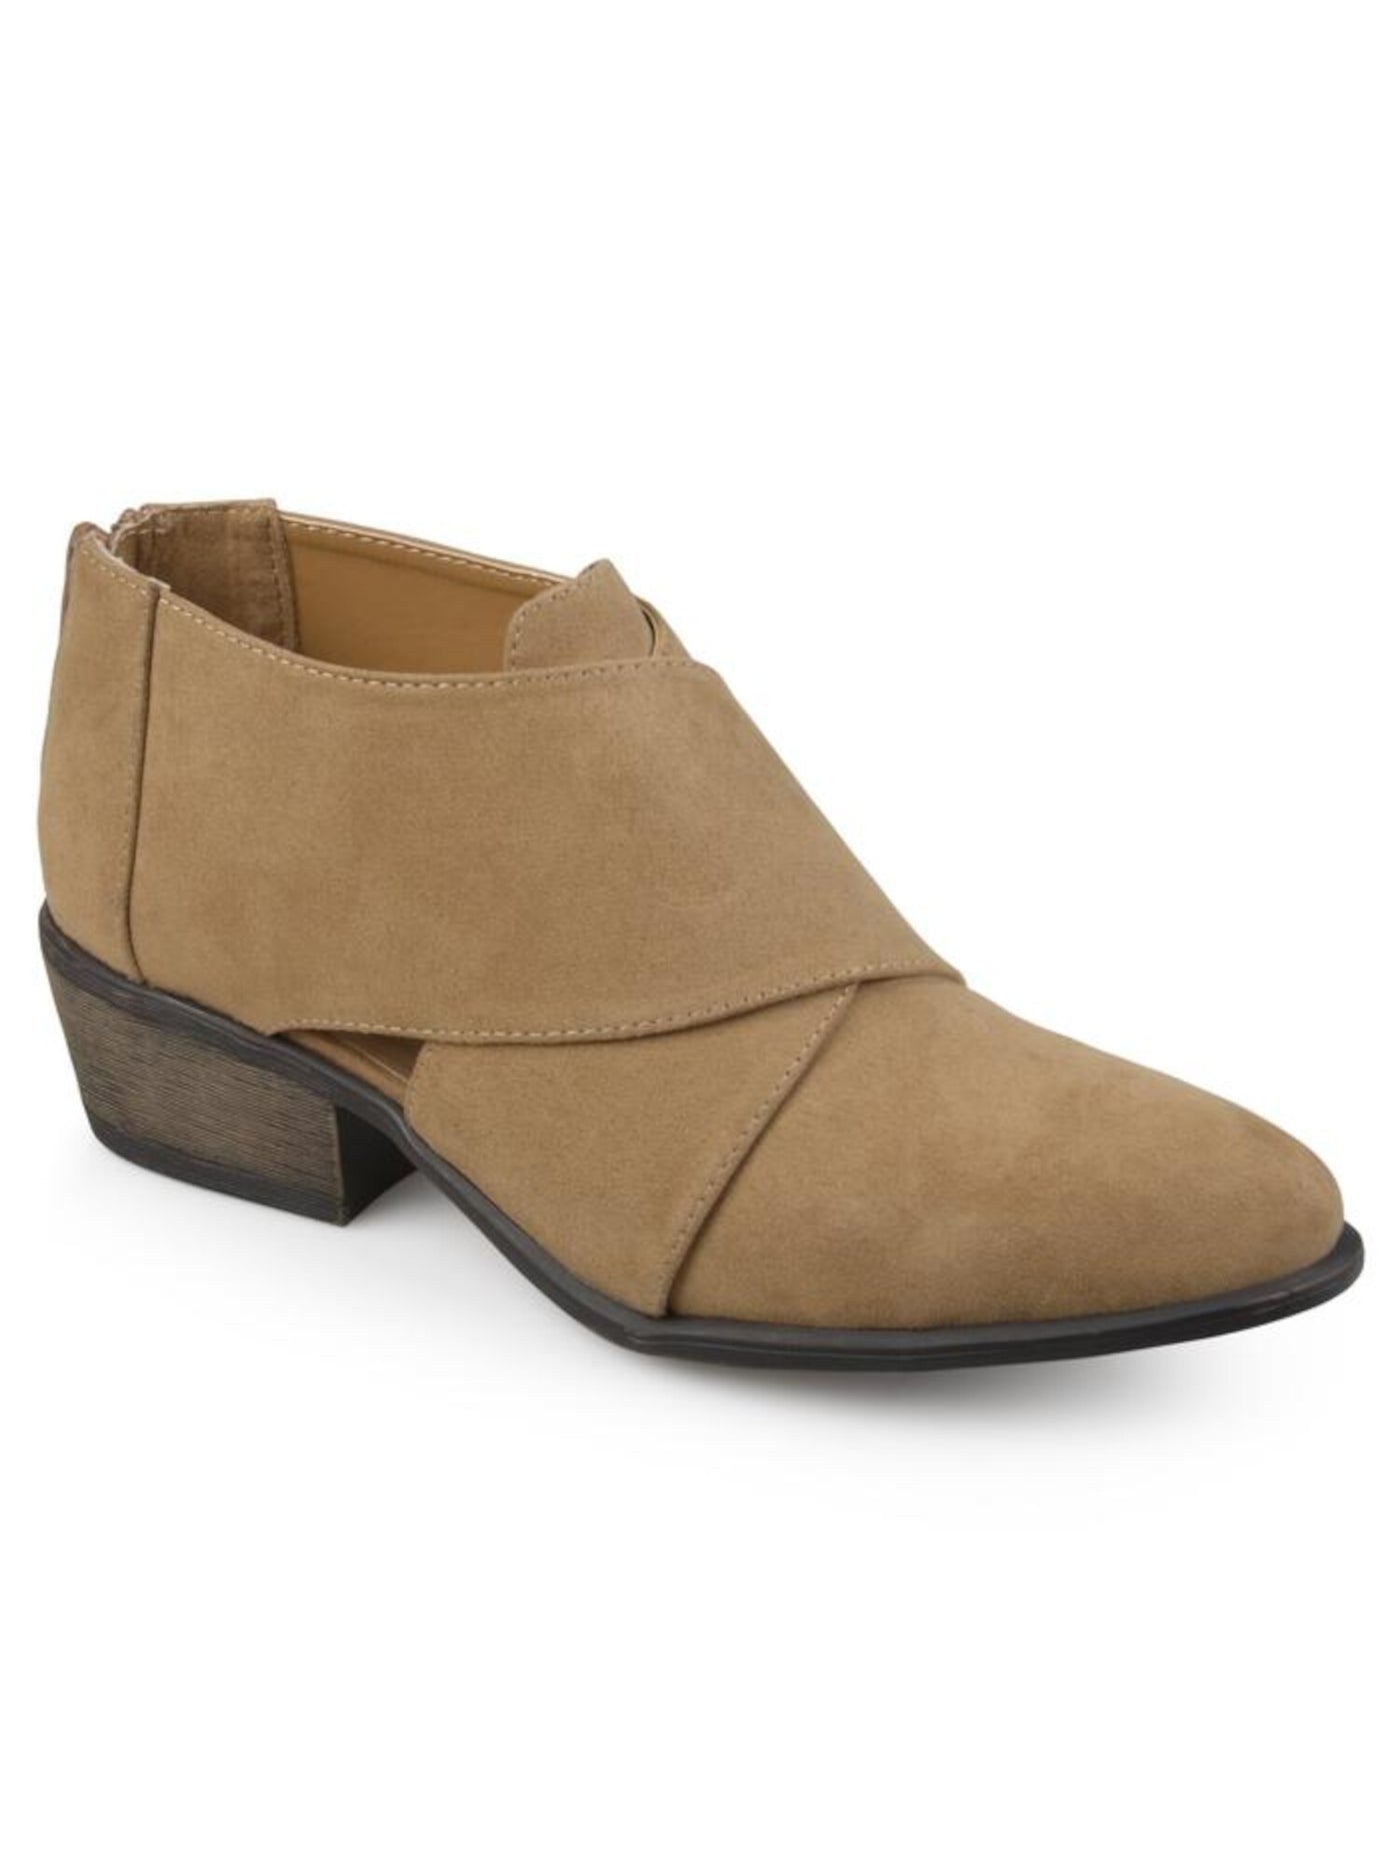 JOURNEE COLLECTION Womens Brown Cushioned Avida Almond Toe Block Heel Zip-Up Boots Shoes 7